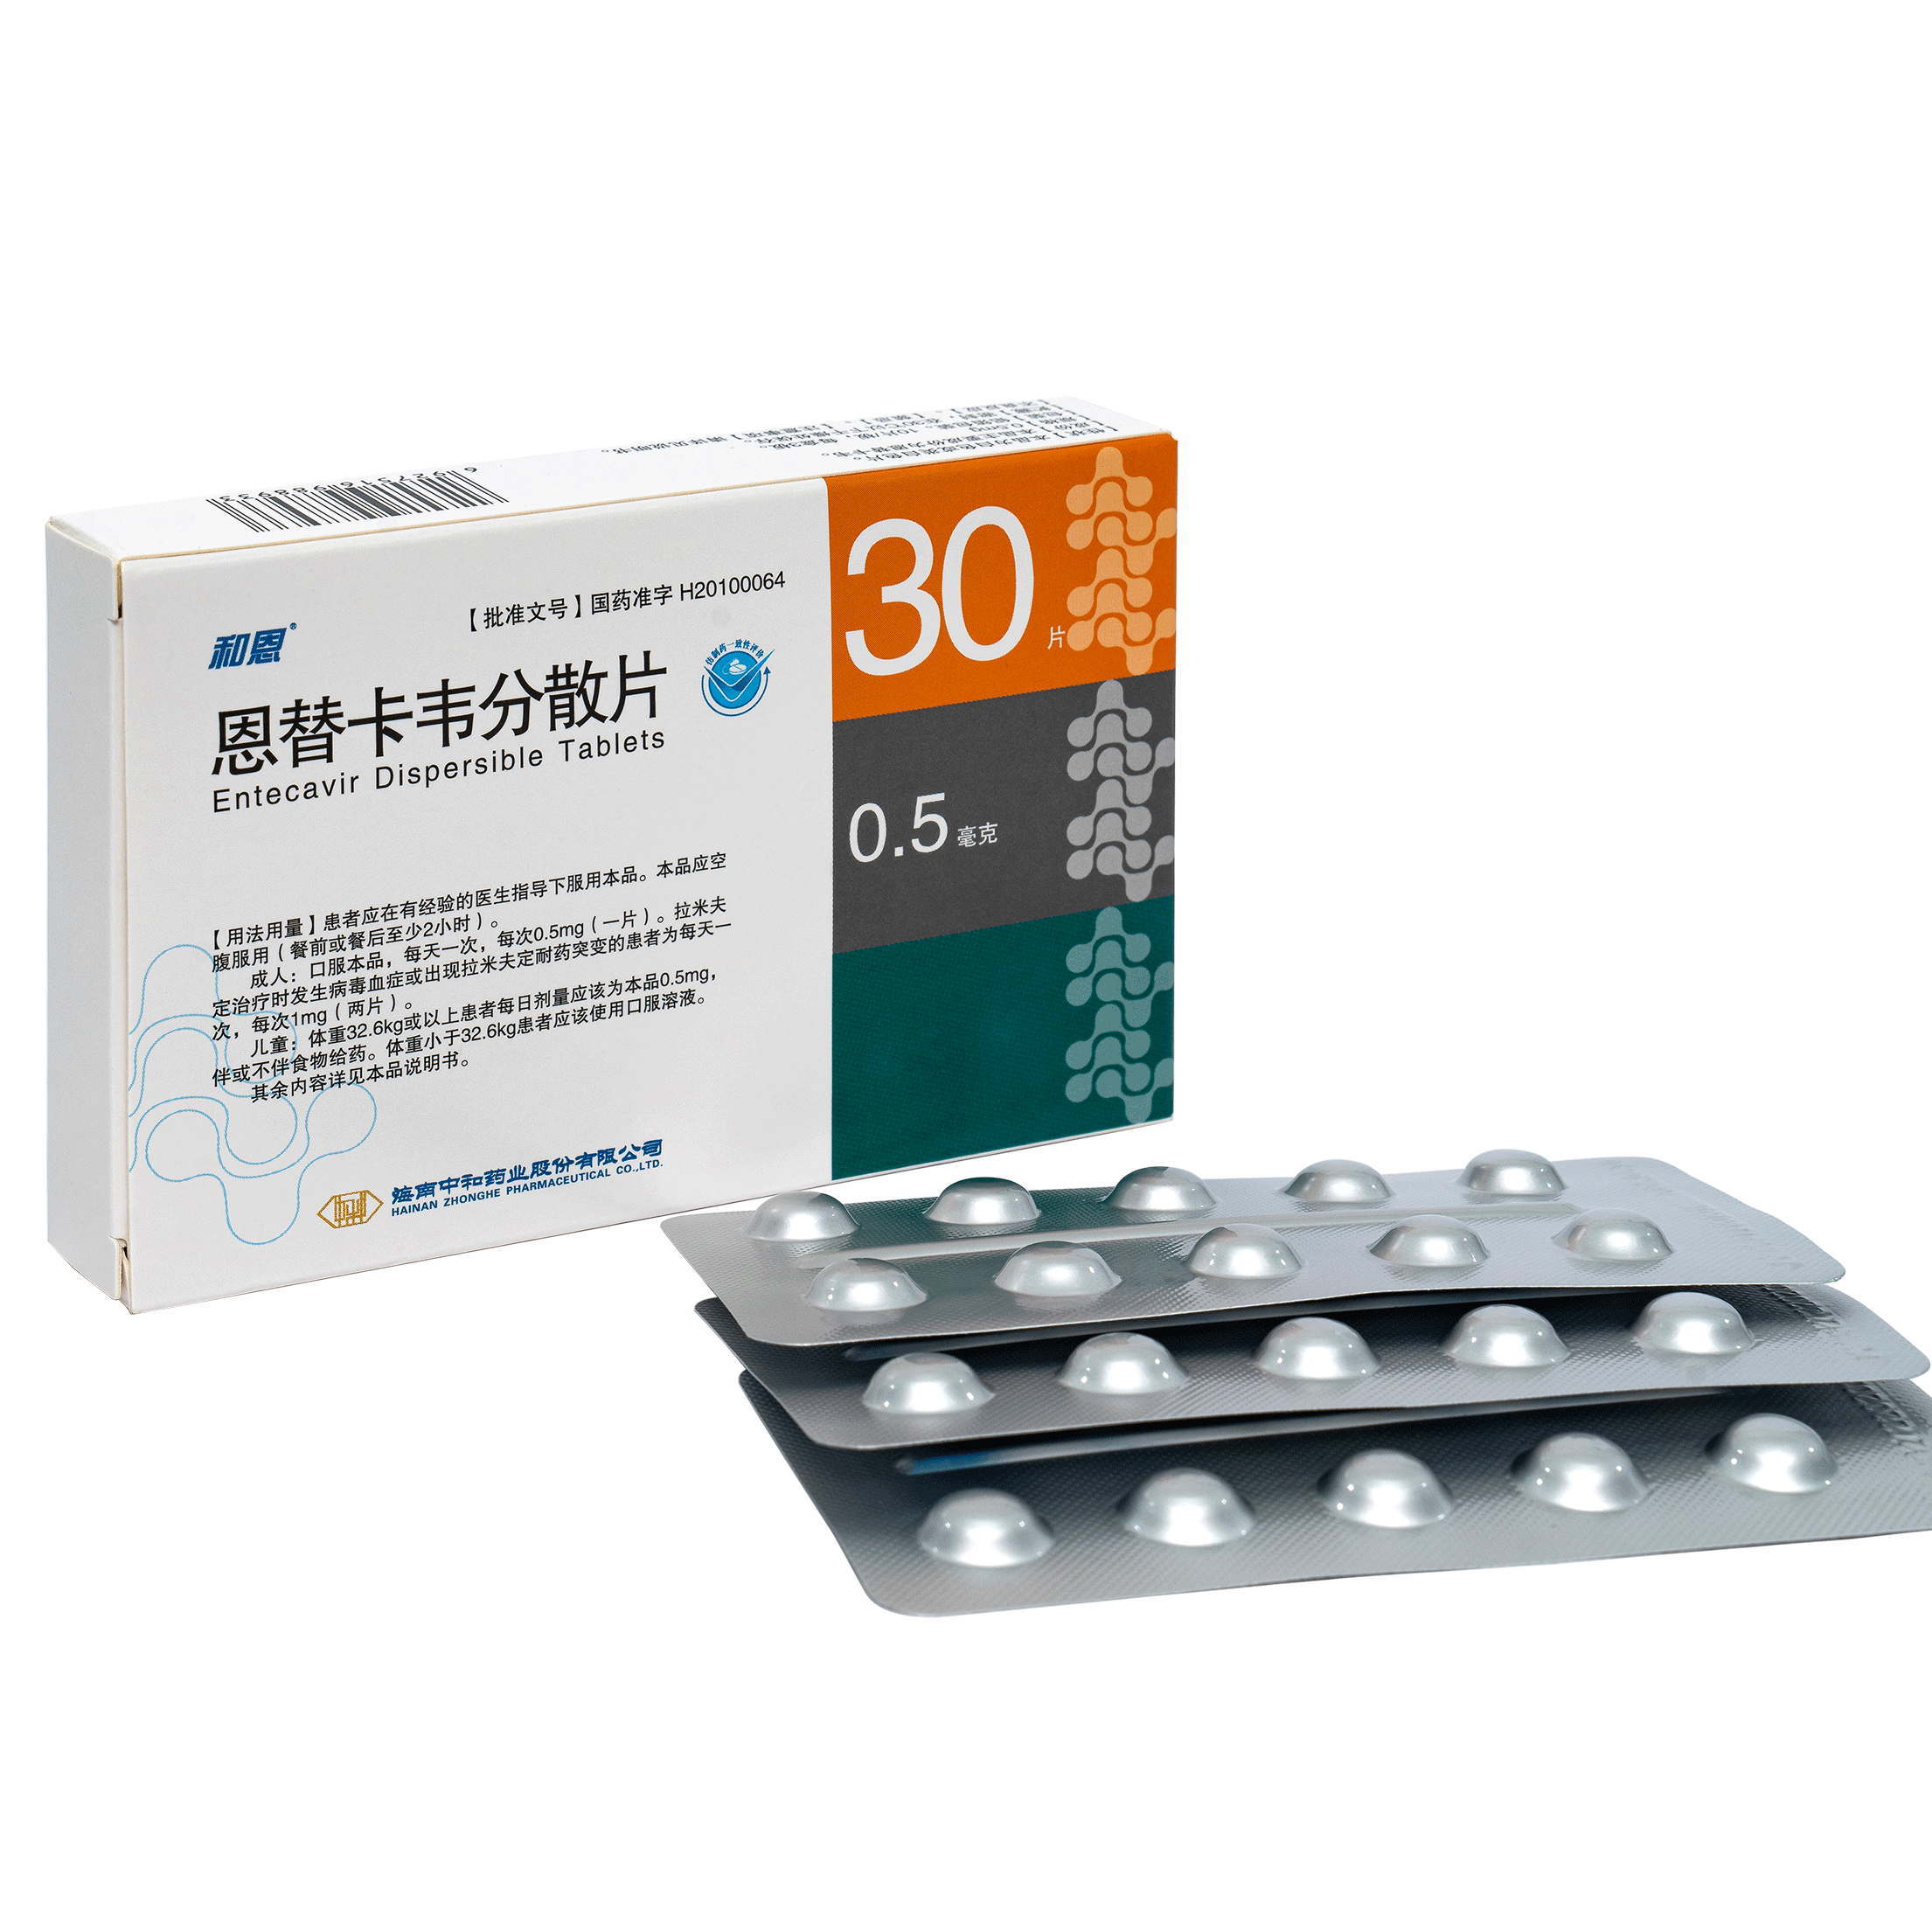 Entecavir Dispersible Tablets and Capsules